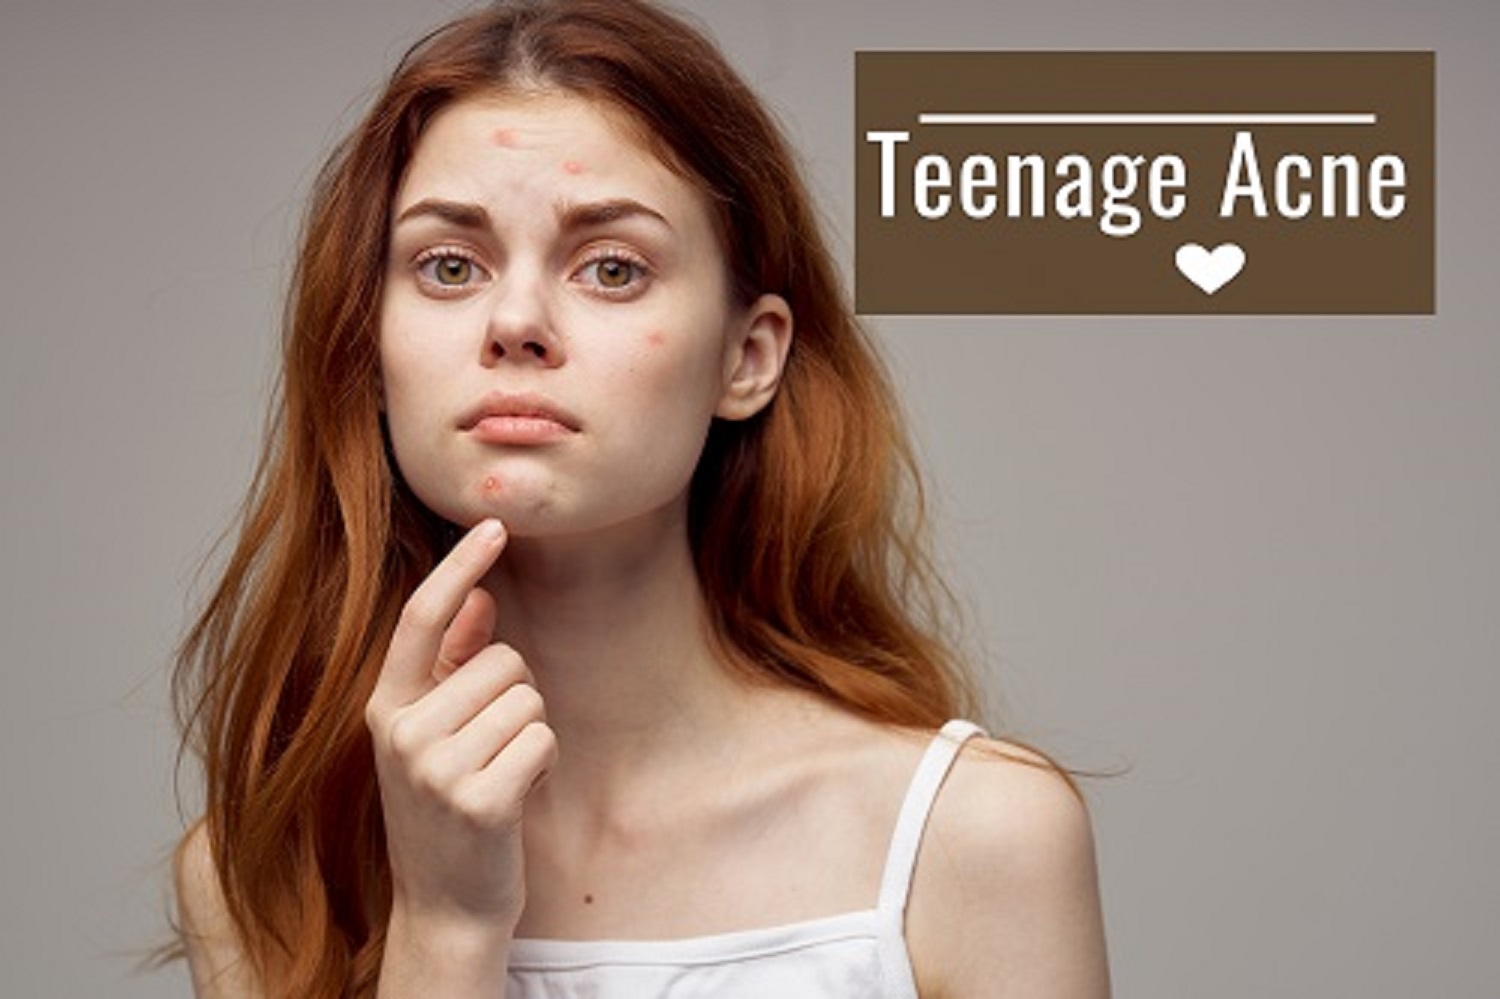 Teenage Acne and Home Remedies